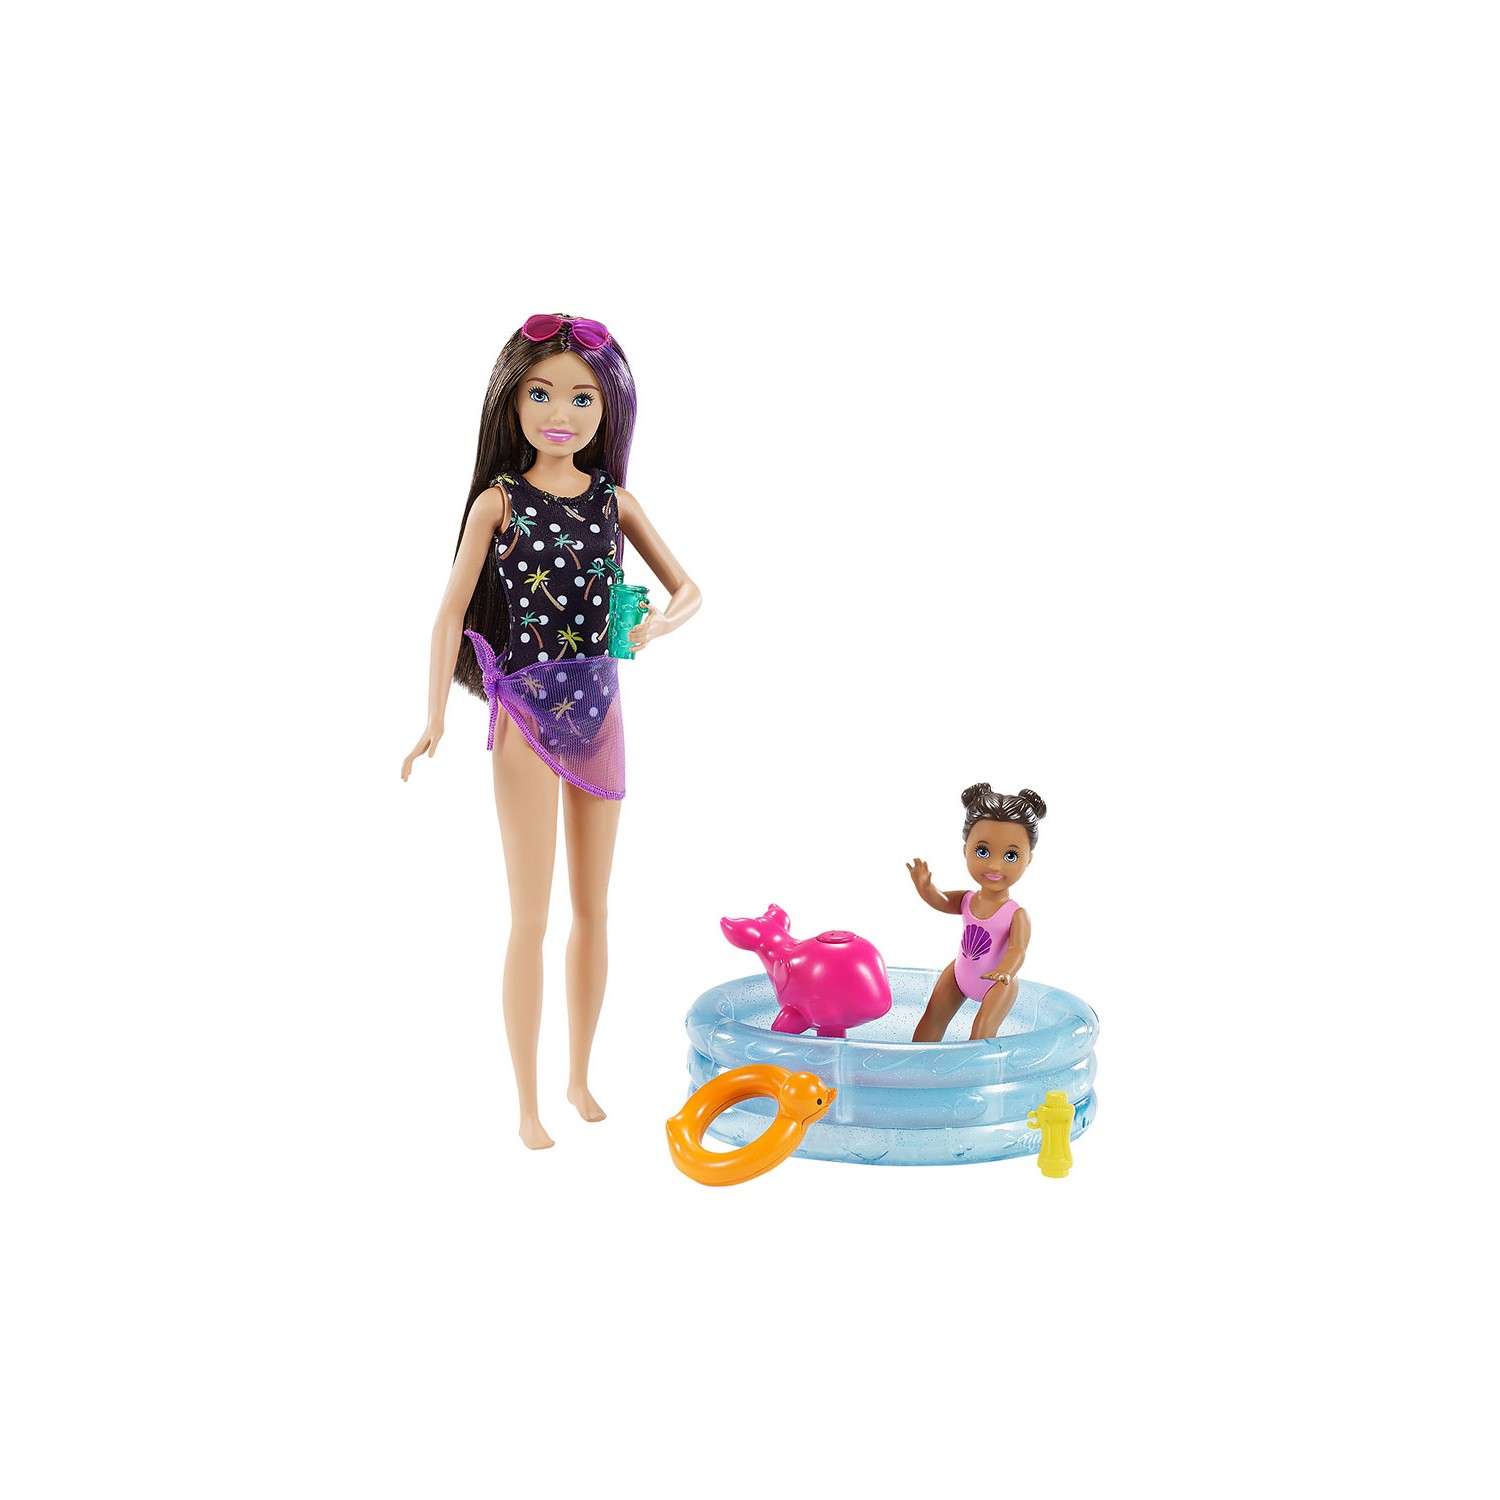 Игровой набор Barbie Skipper Babysitters игровой набор с барби и аксессуарами кукла барби для девочки барби со съемными нарядами кукла набор аксессуаров для барби